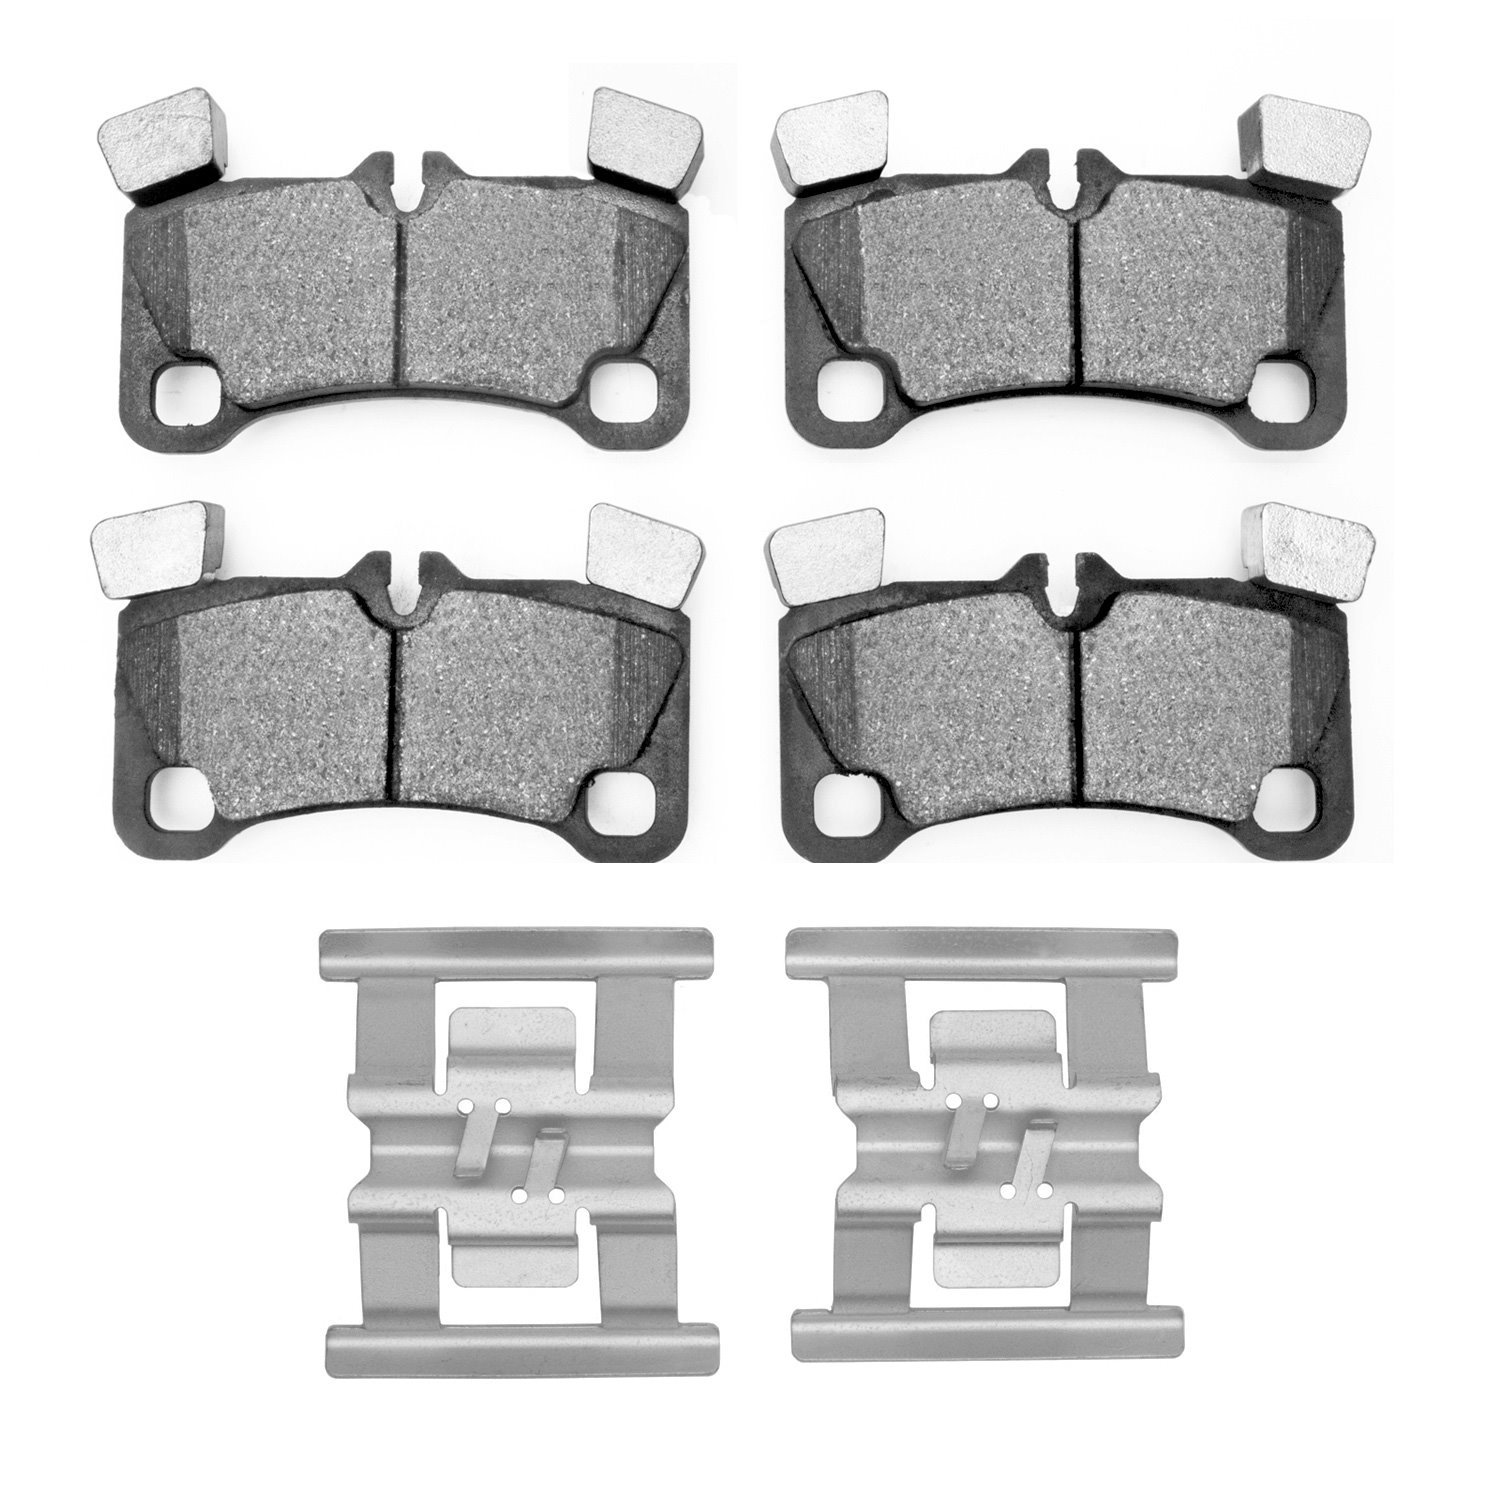 1310-1350-01 3000-Series Ceramic Brake Pads & Hardware Kit, 2008-2010 Multiple Makes/Models, Position: Rear